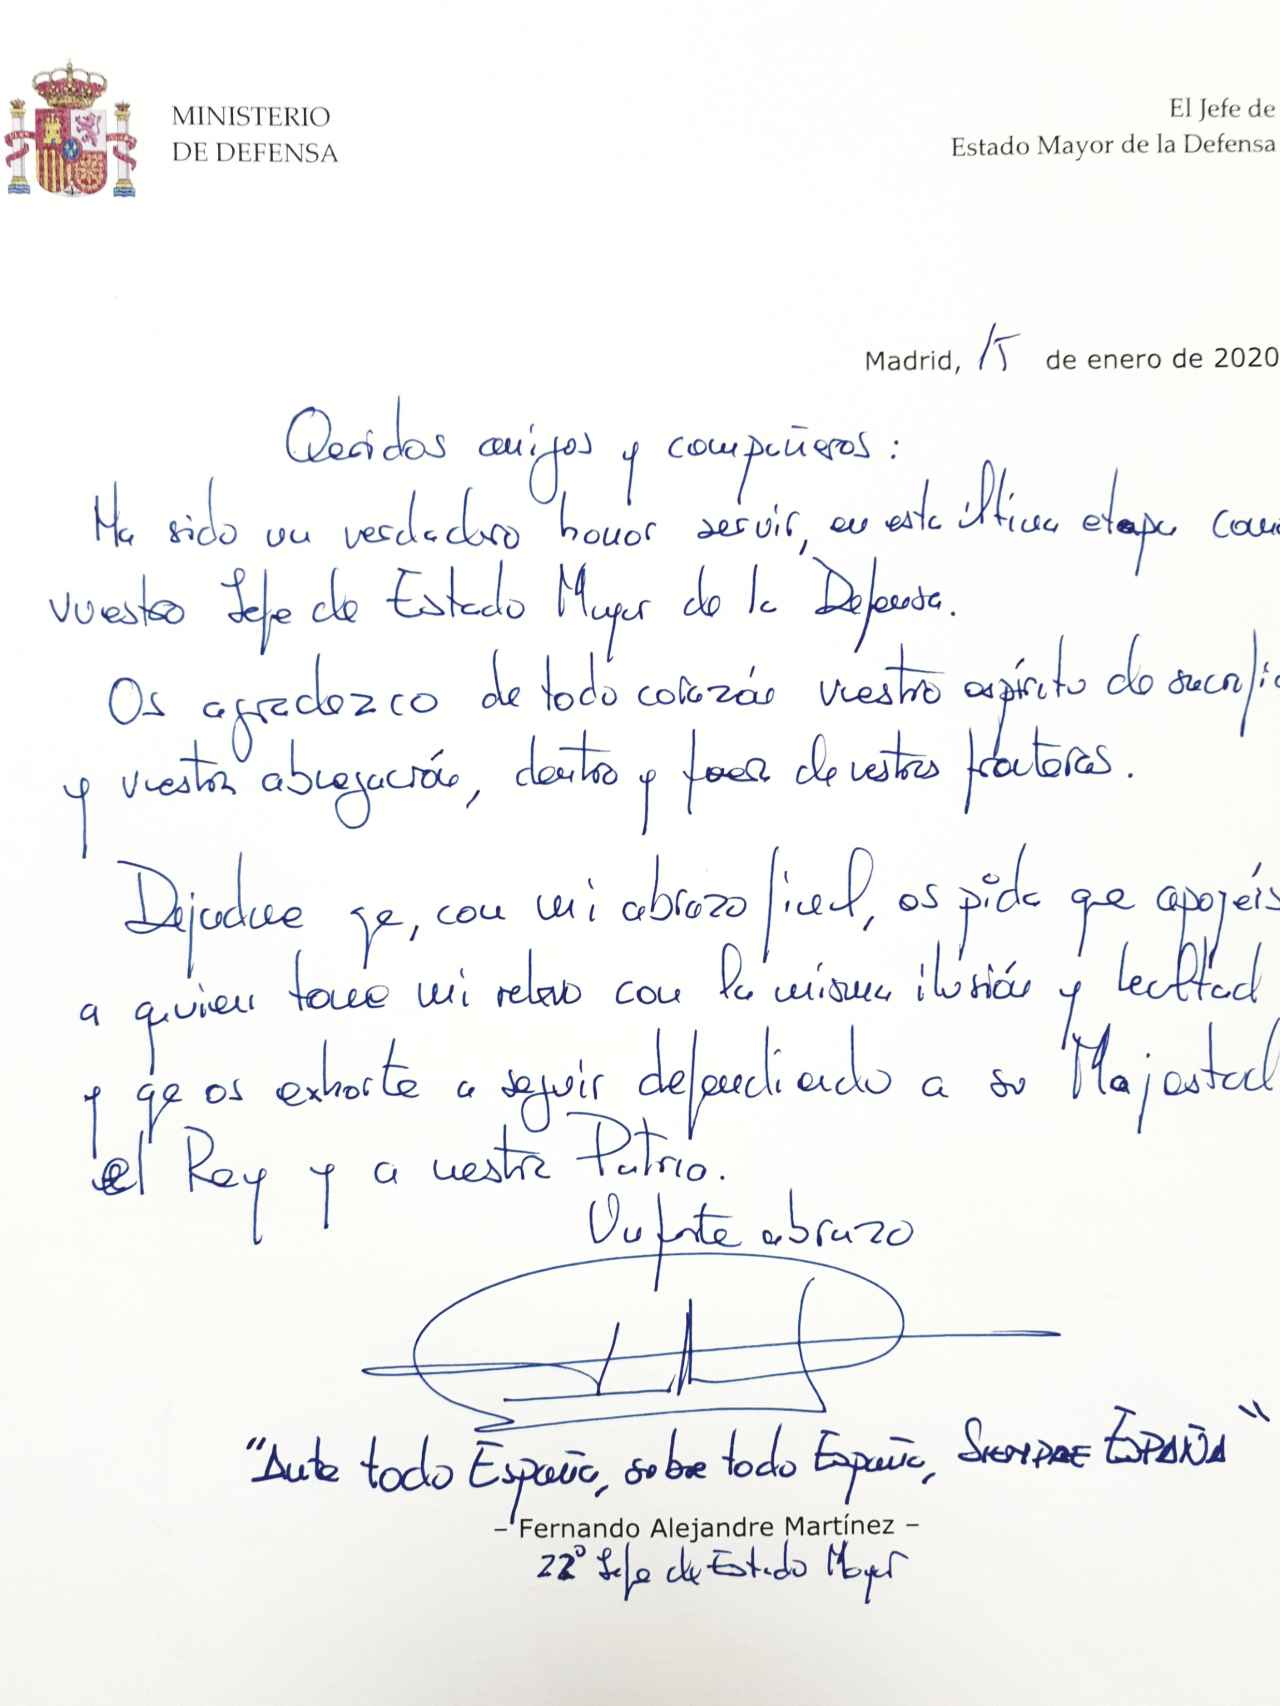 La carta del anterior JEMAD, general Alejandre, dirigida a los militares españoles.